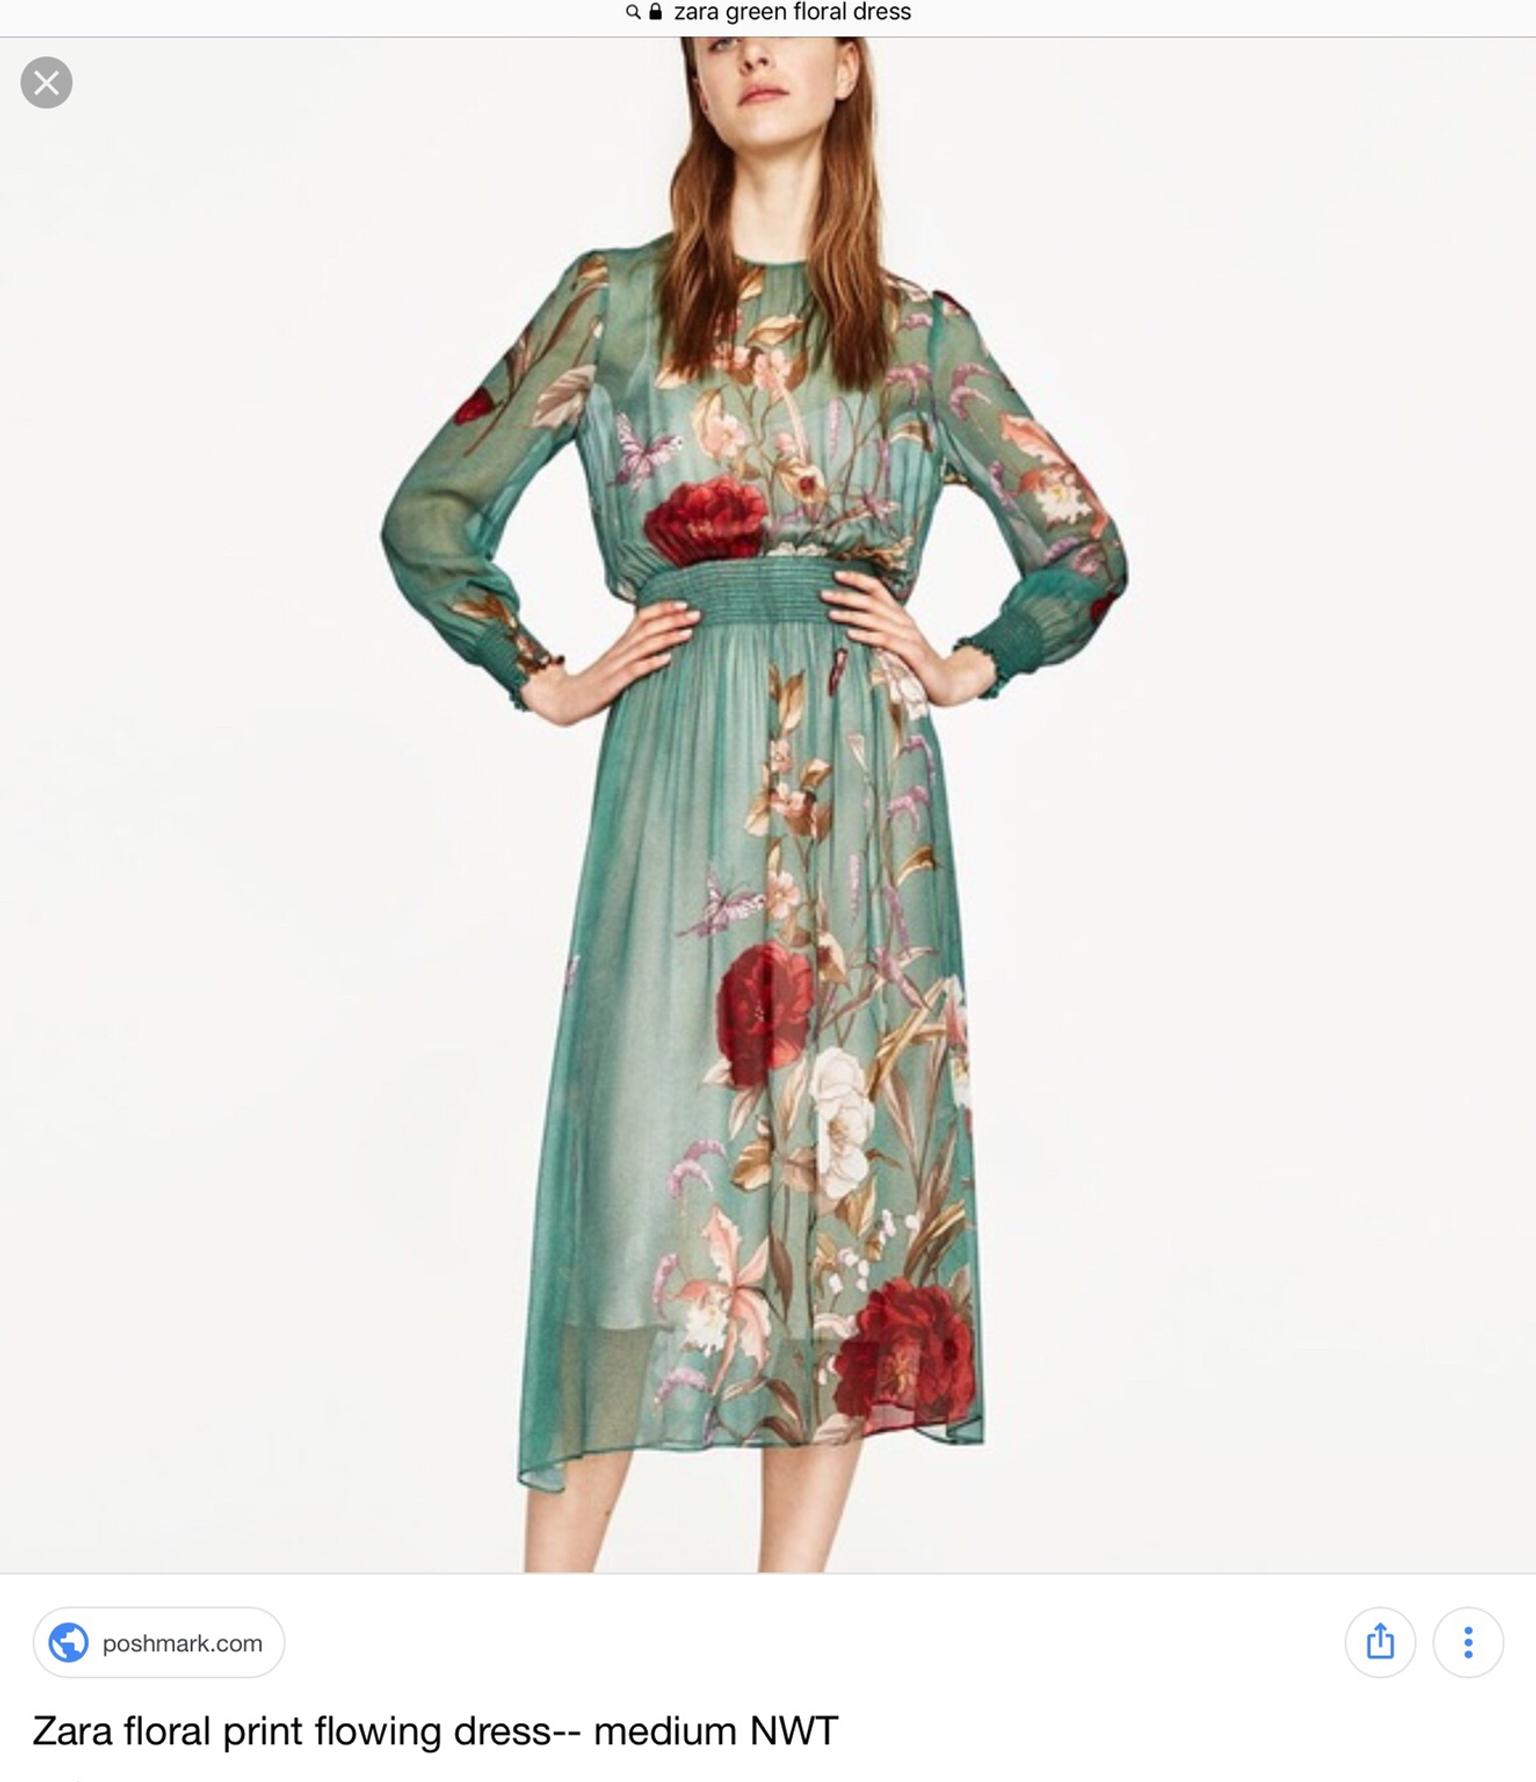 zara green floral dress